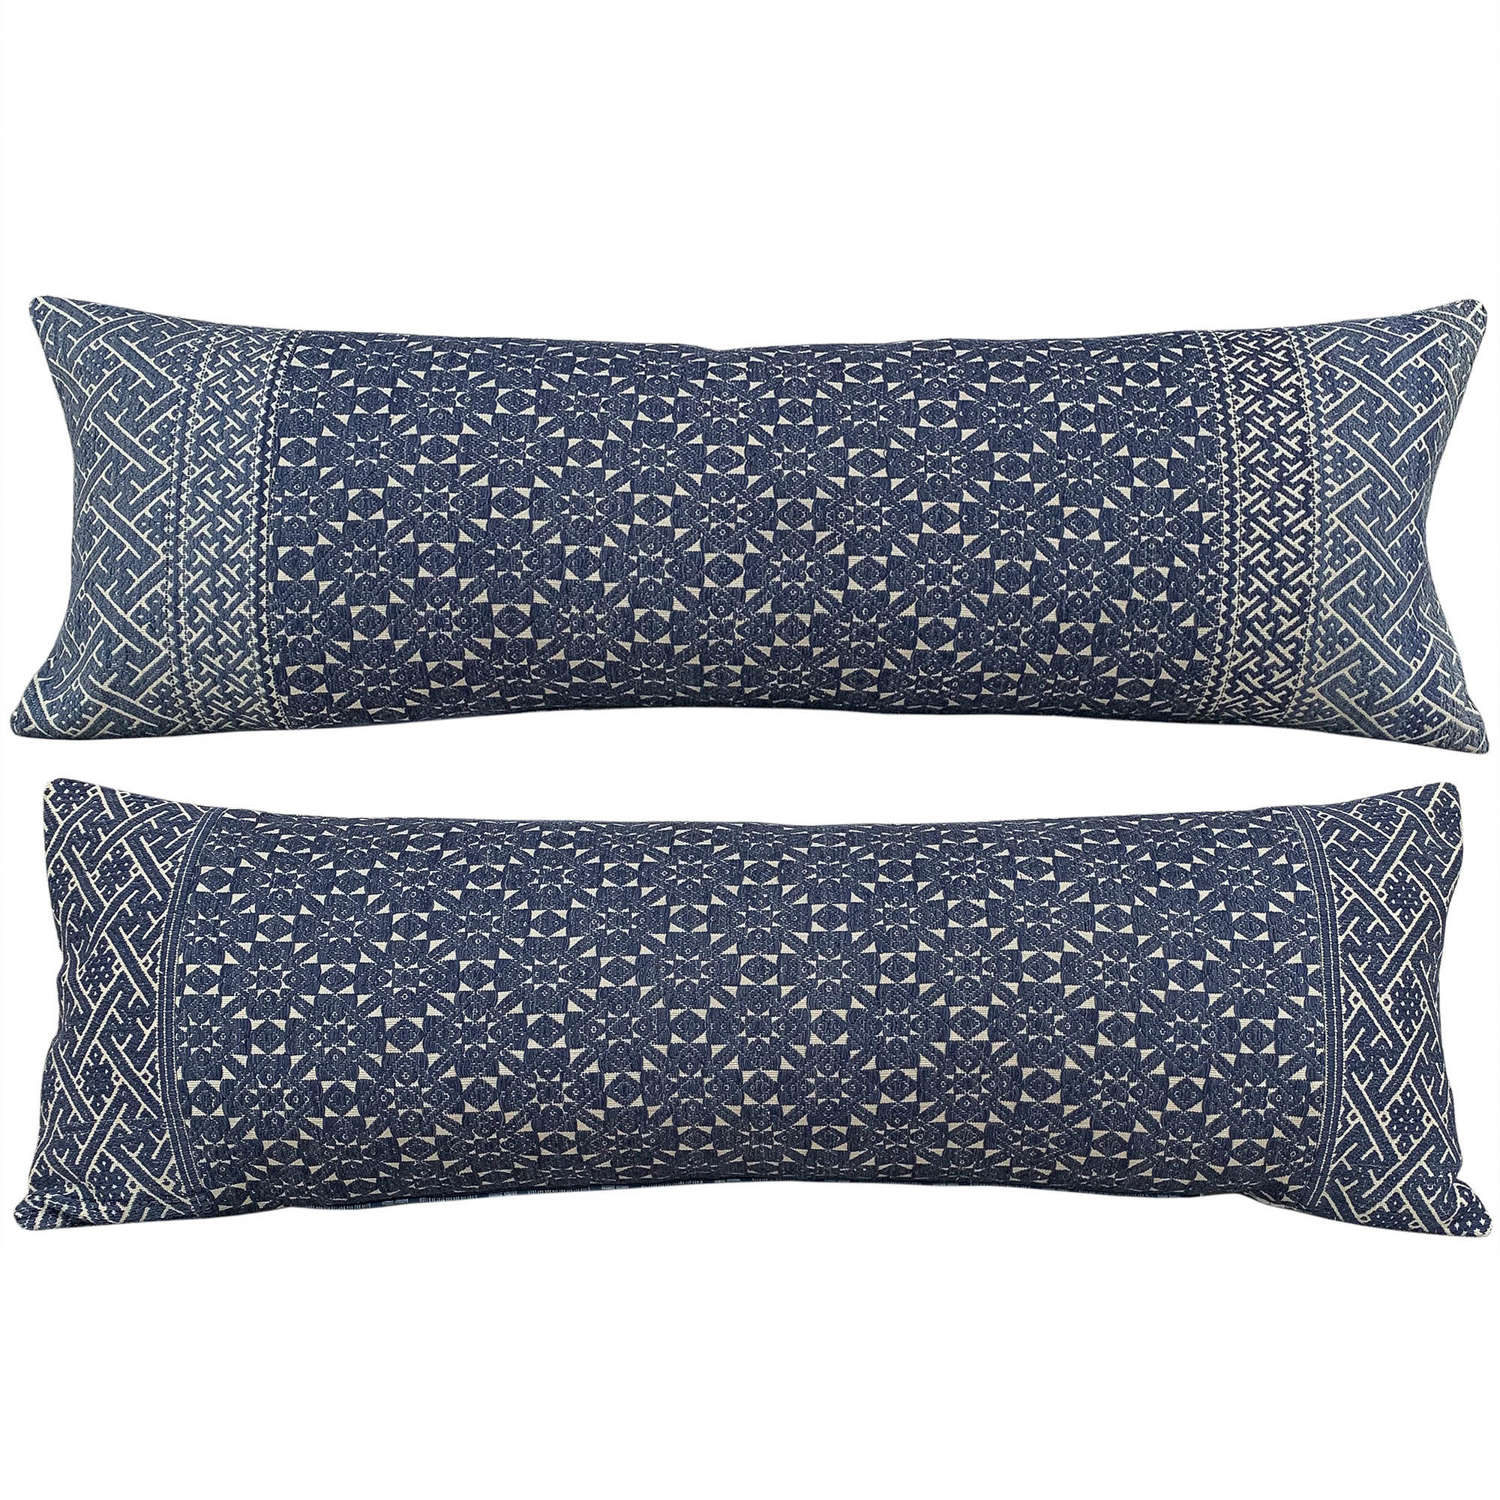 Zhuang bolster cushions